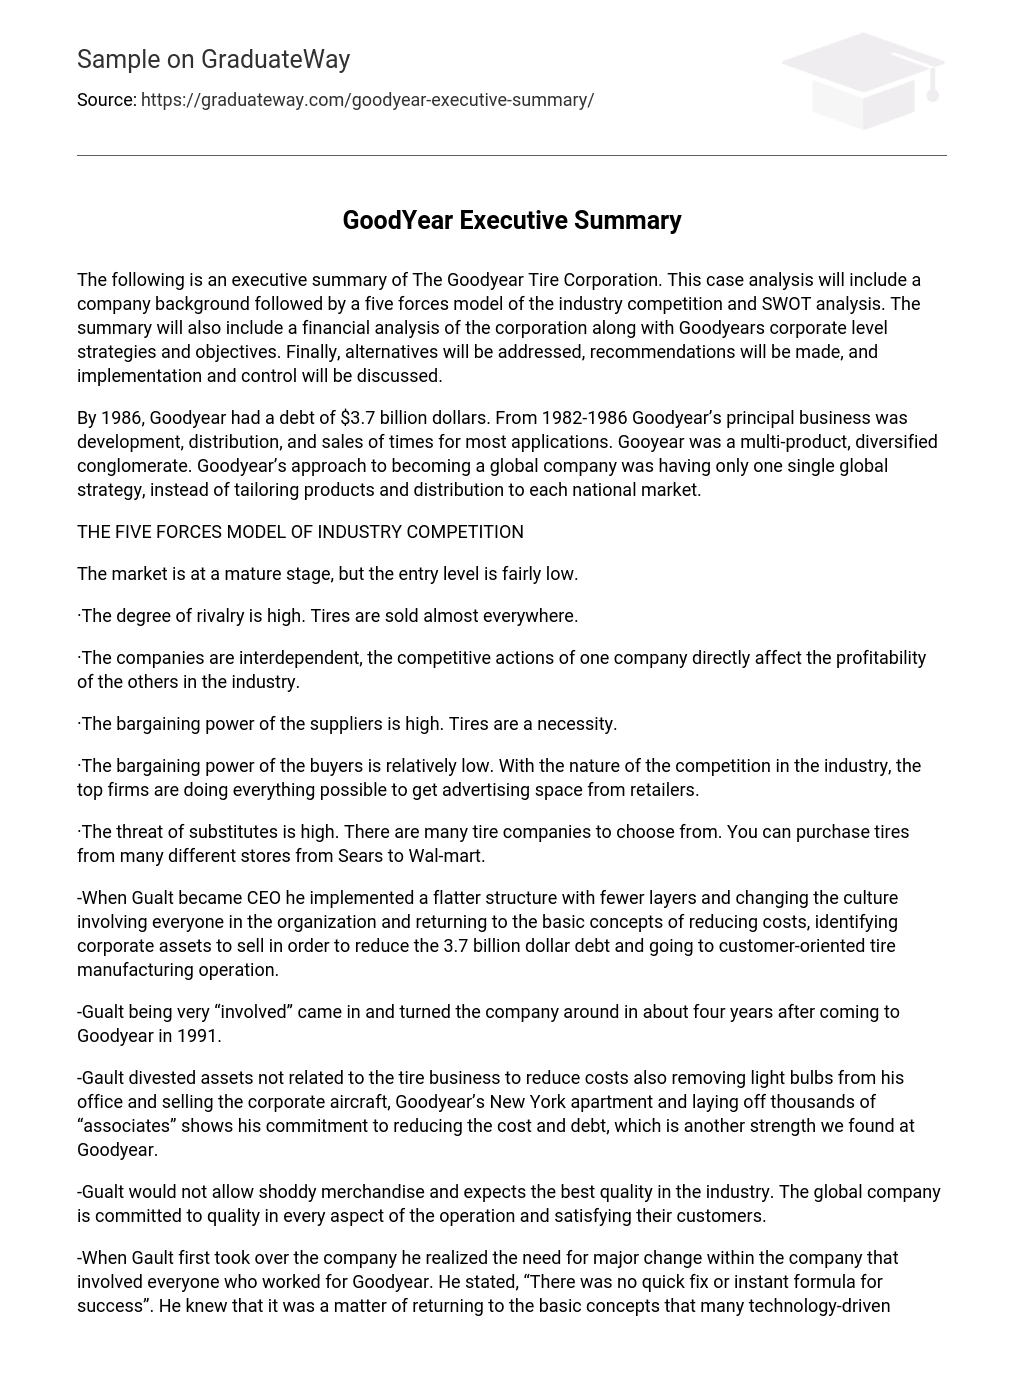 GoodYear Executive Summary